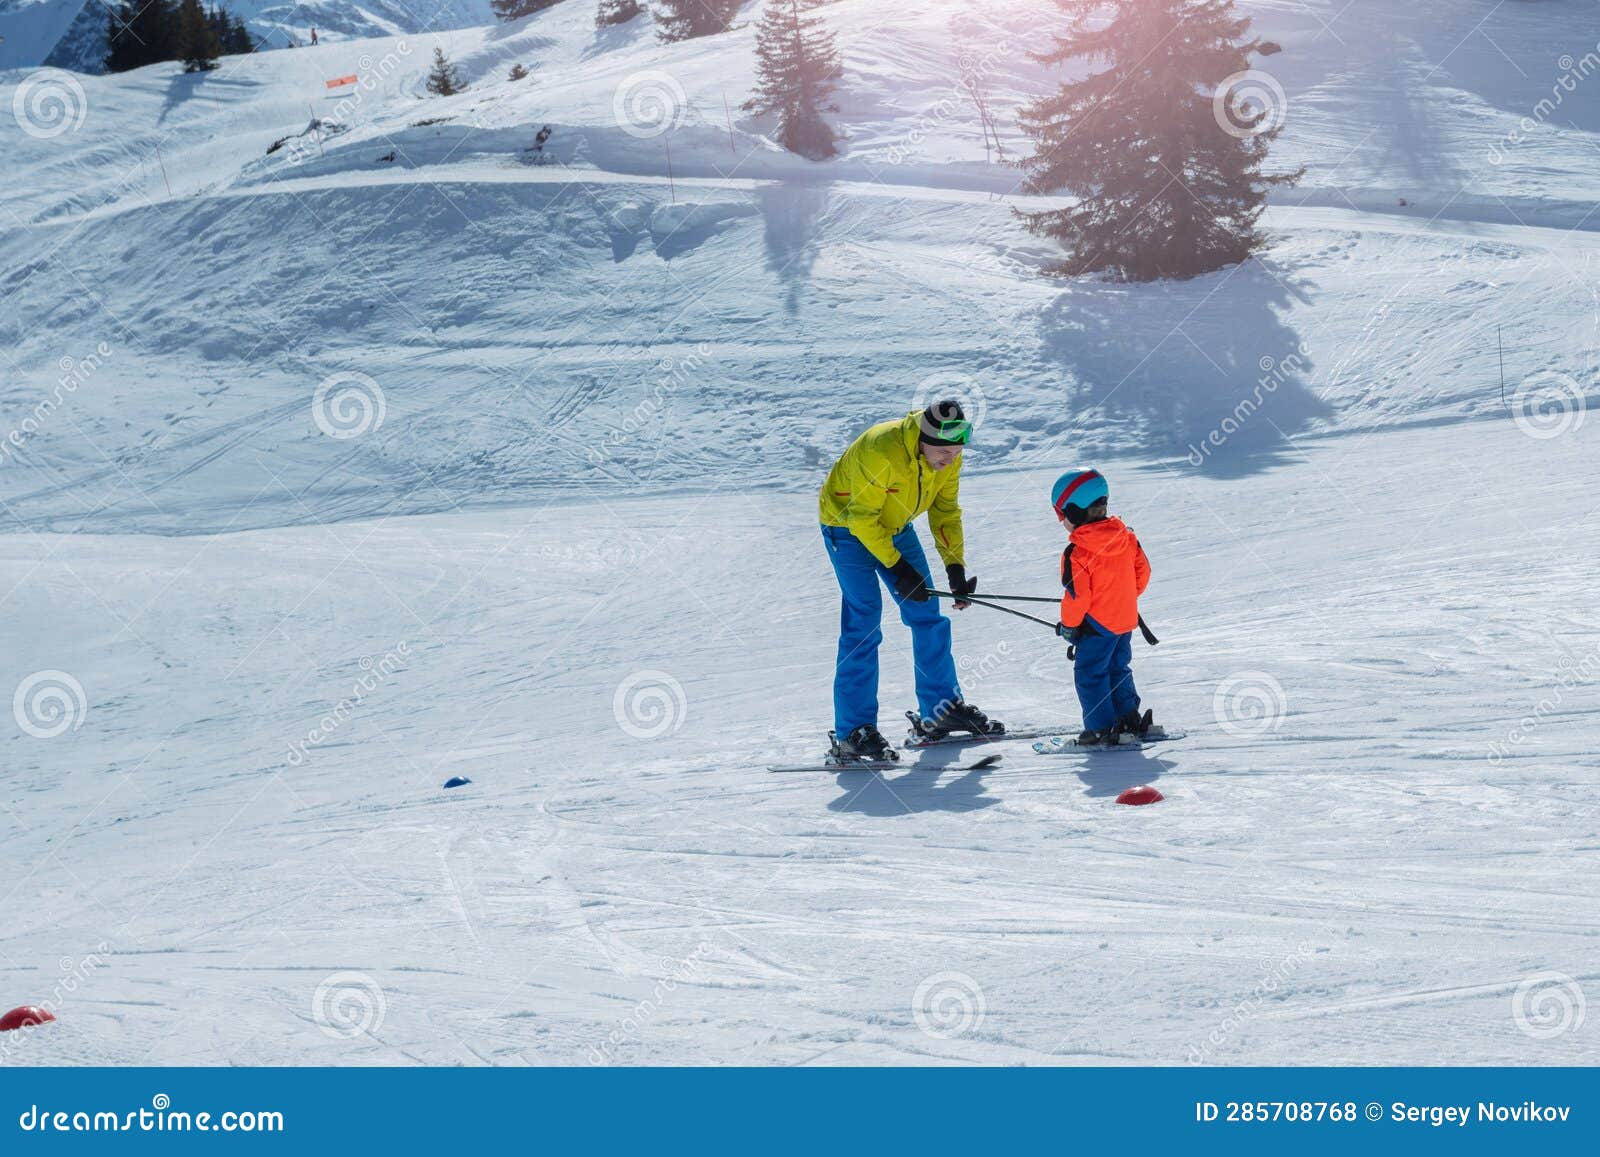 dad glide backwards teaching little child to ski using poles